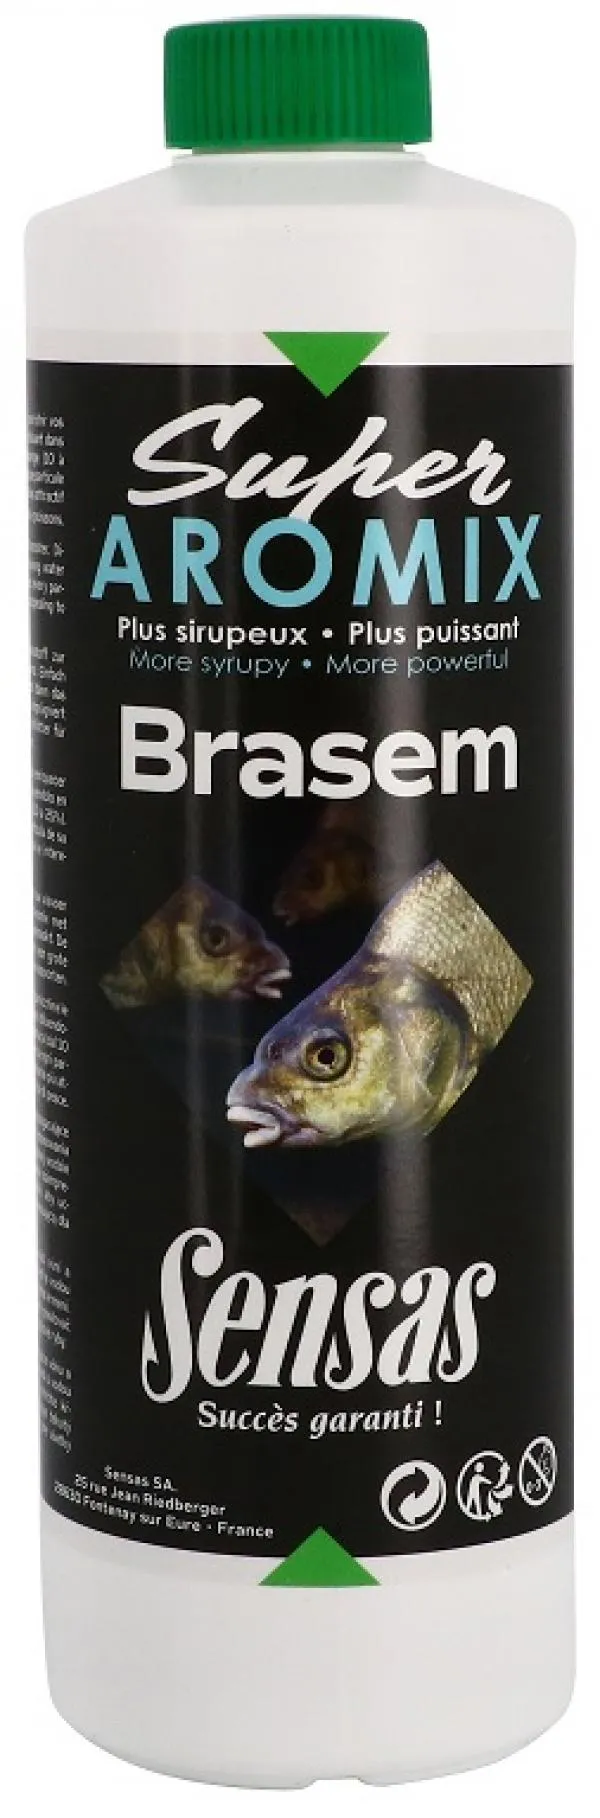 Sensas Attraktor Aromix Brasem Belge (nagy hal) 500ml